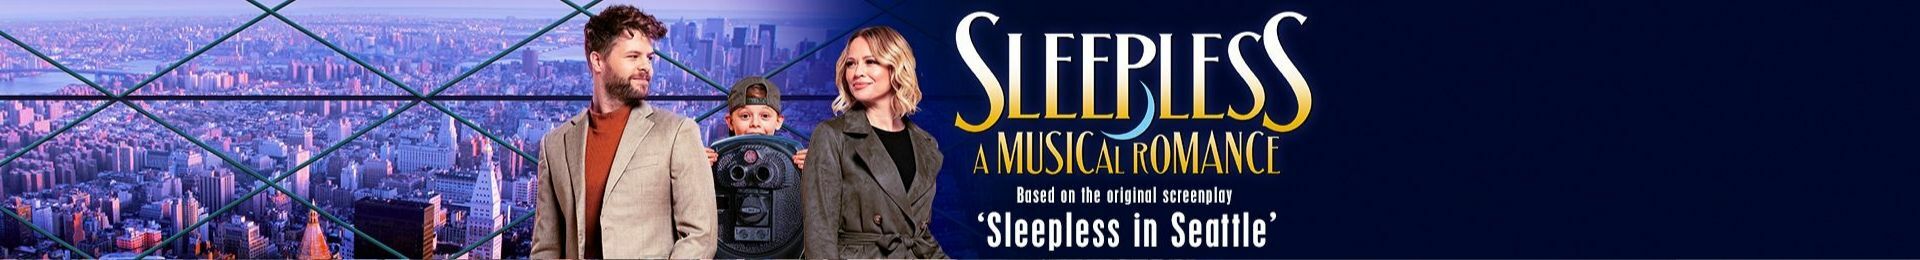 Sleepless: A Musical Romance banner image